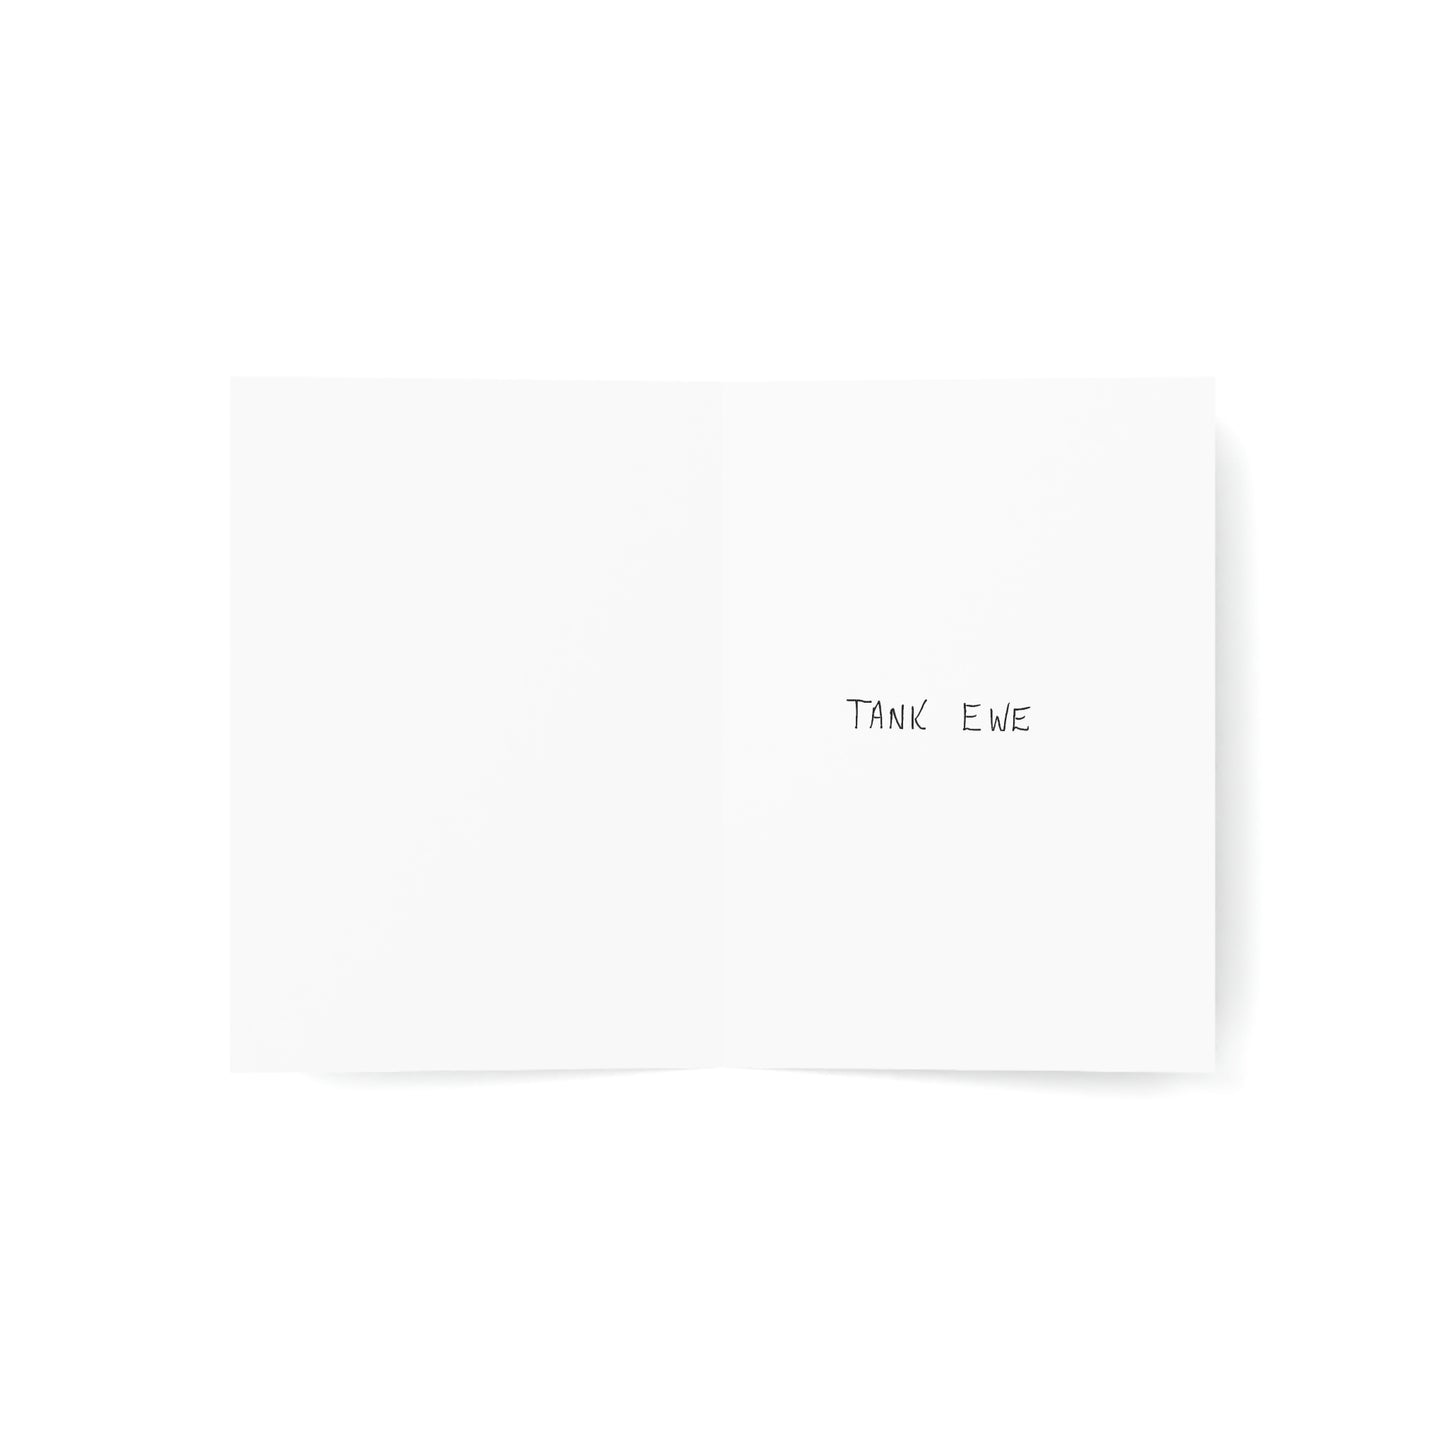 Thank You - Tank Ewe - Greeting Cards (1, 10, 30, and 50pcs)